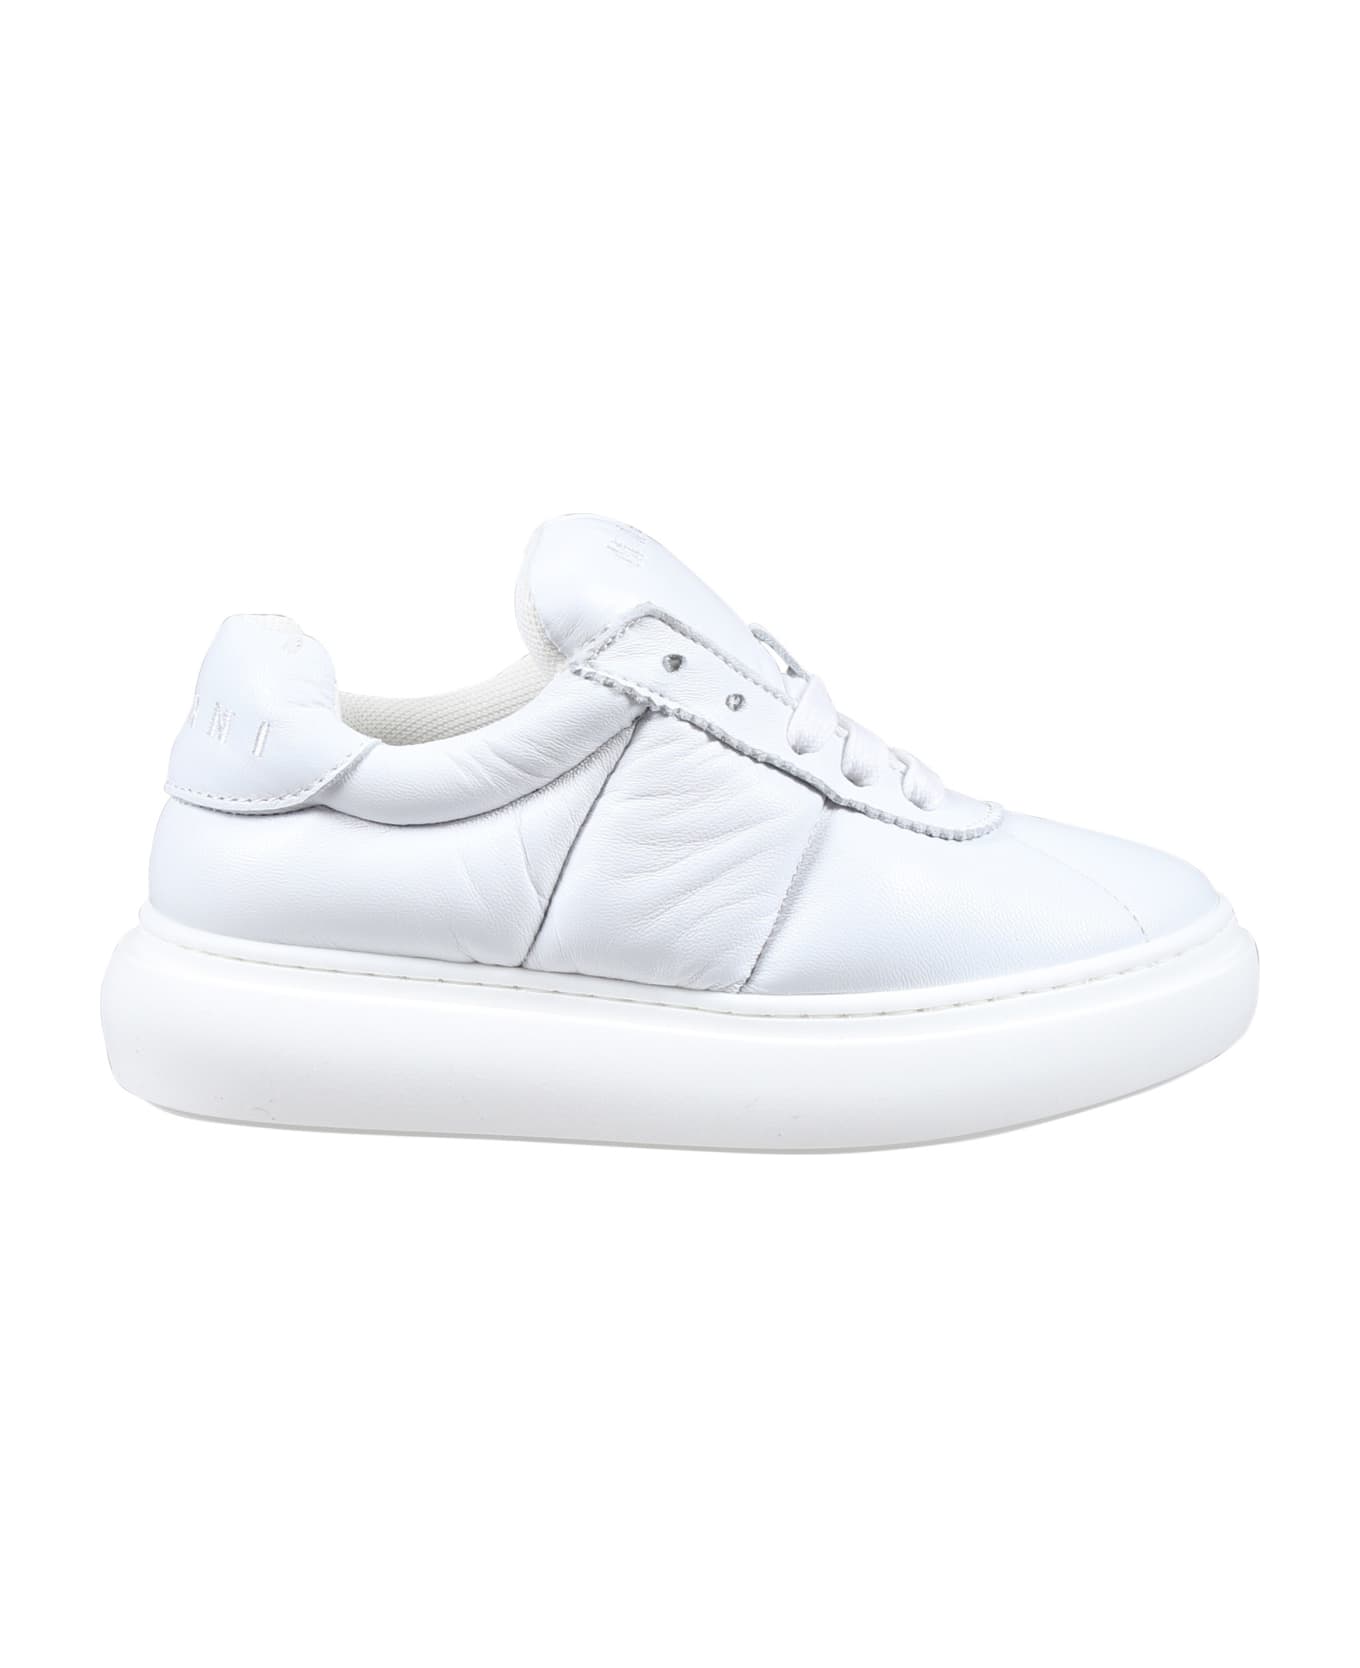 Marni White Sneakers For Girl With Logo - White シューズ